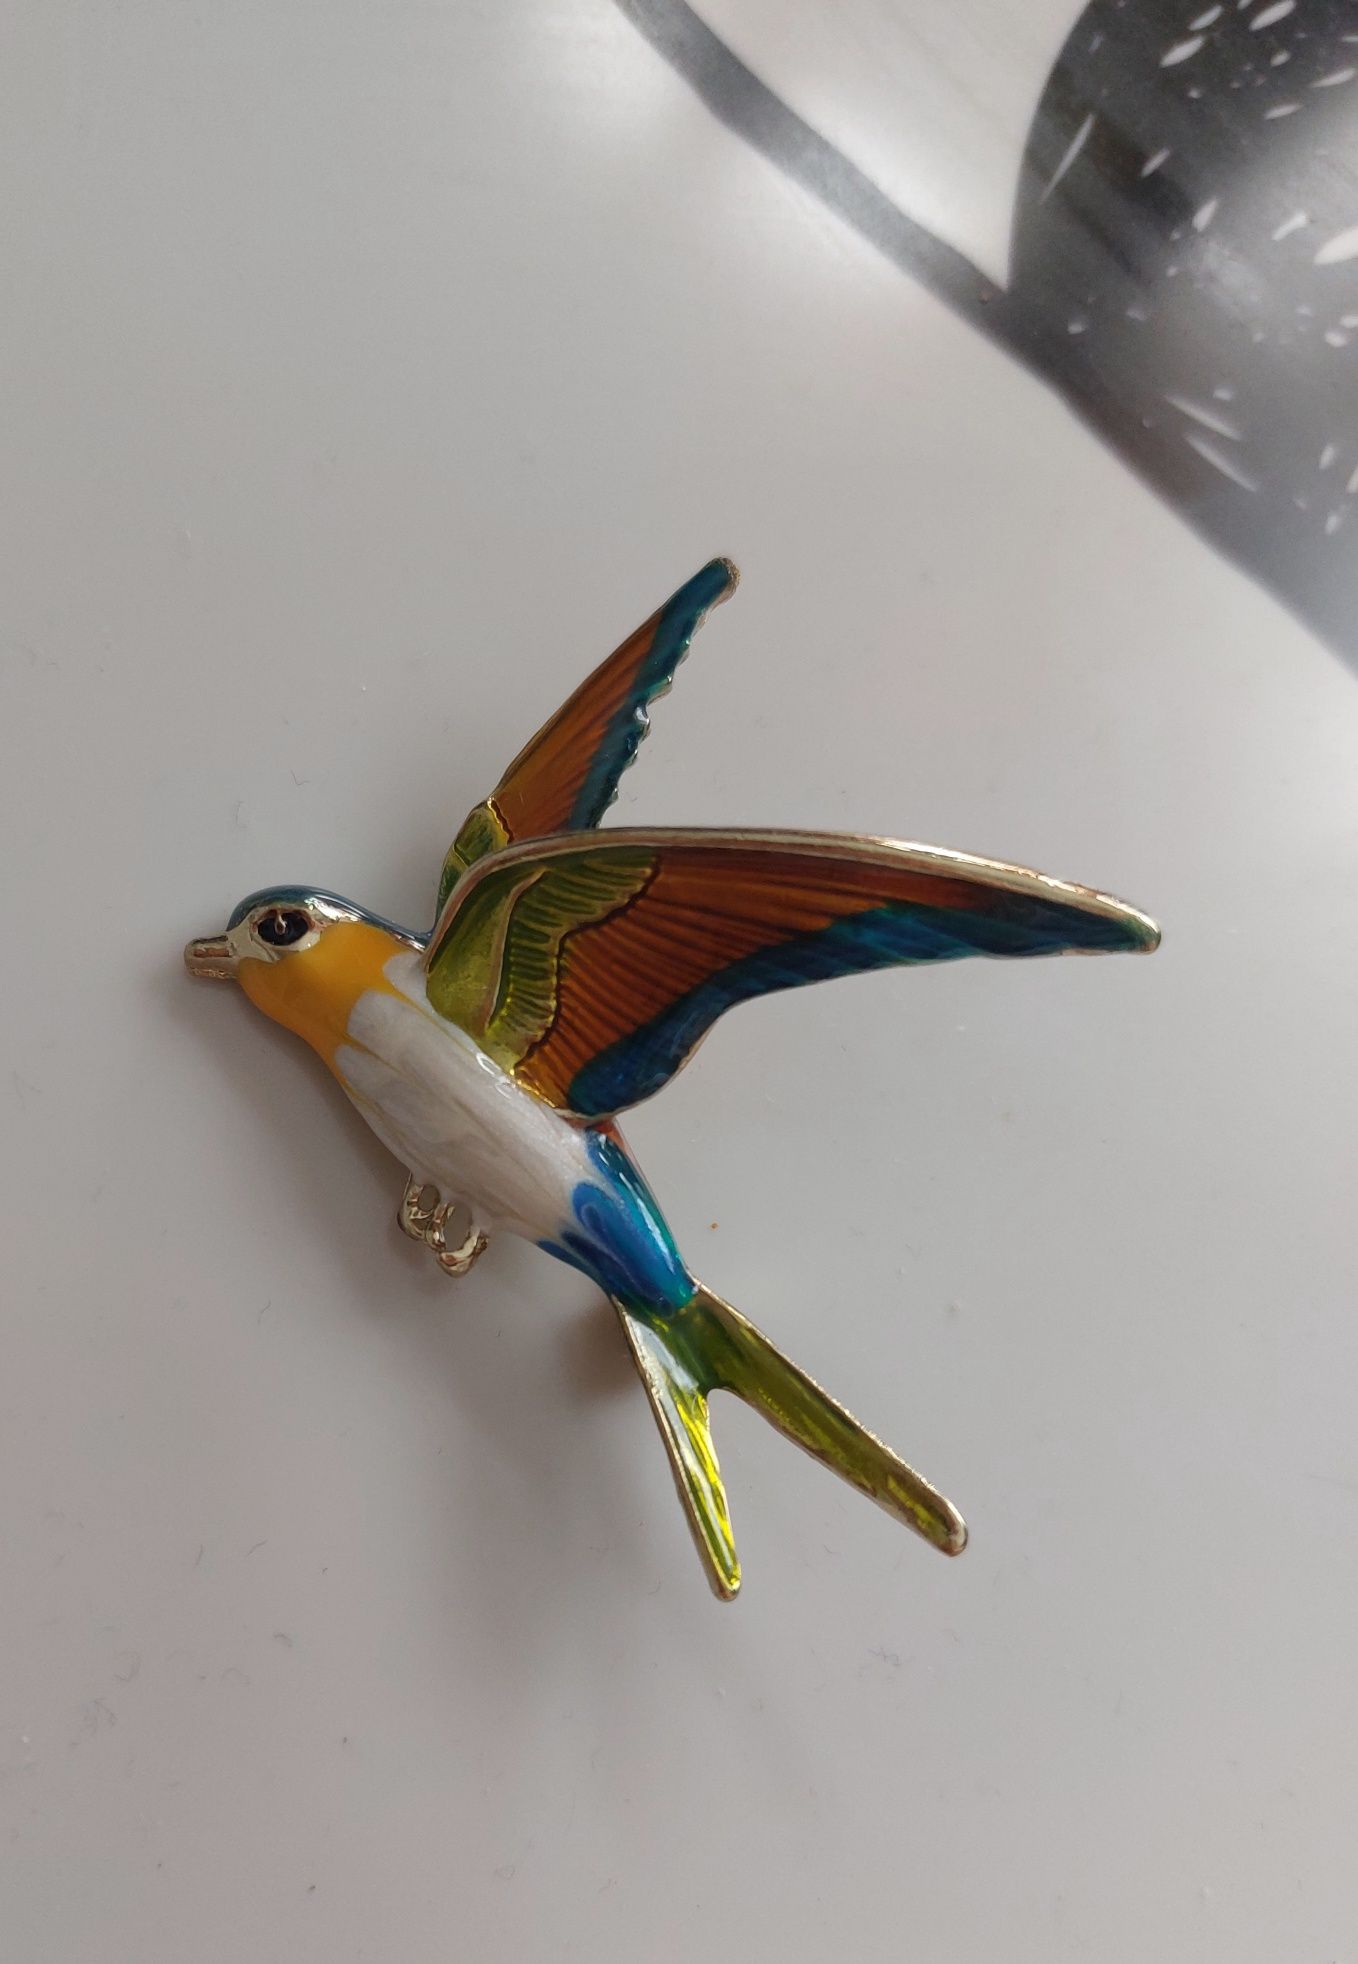 Nowa broszka jaskółka ptak koliber wiosna